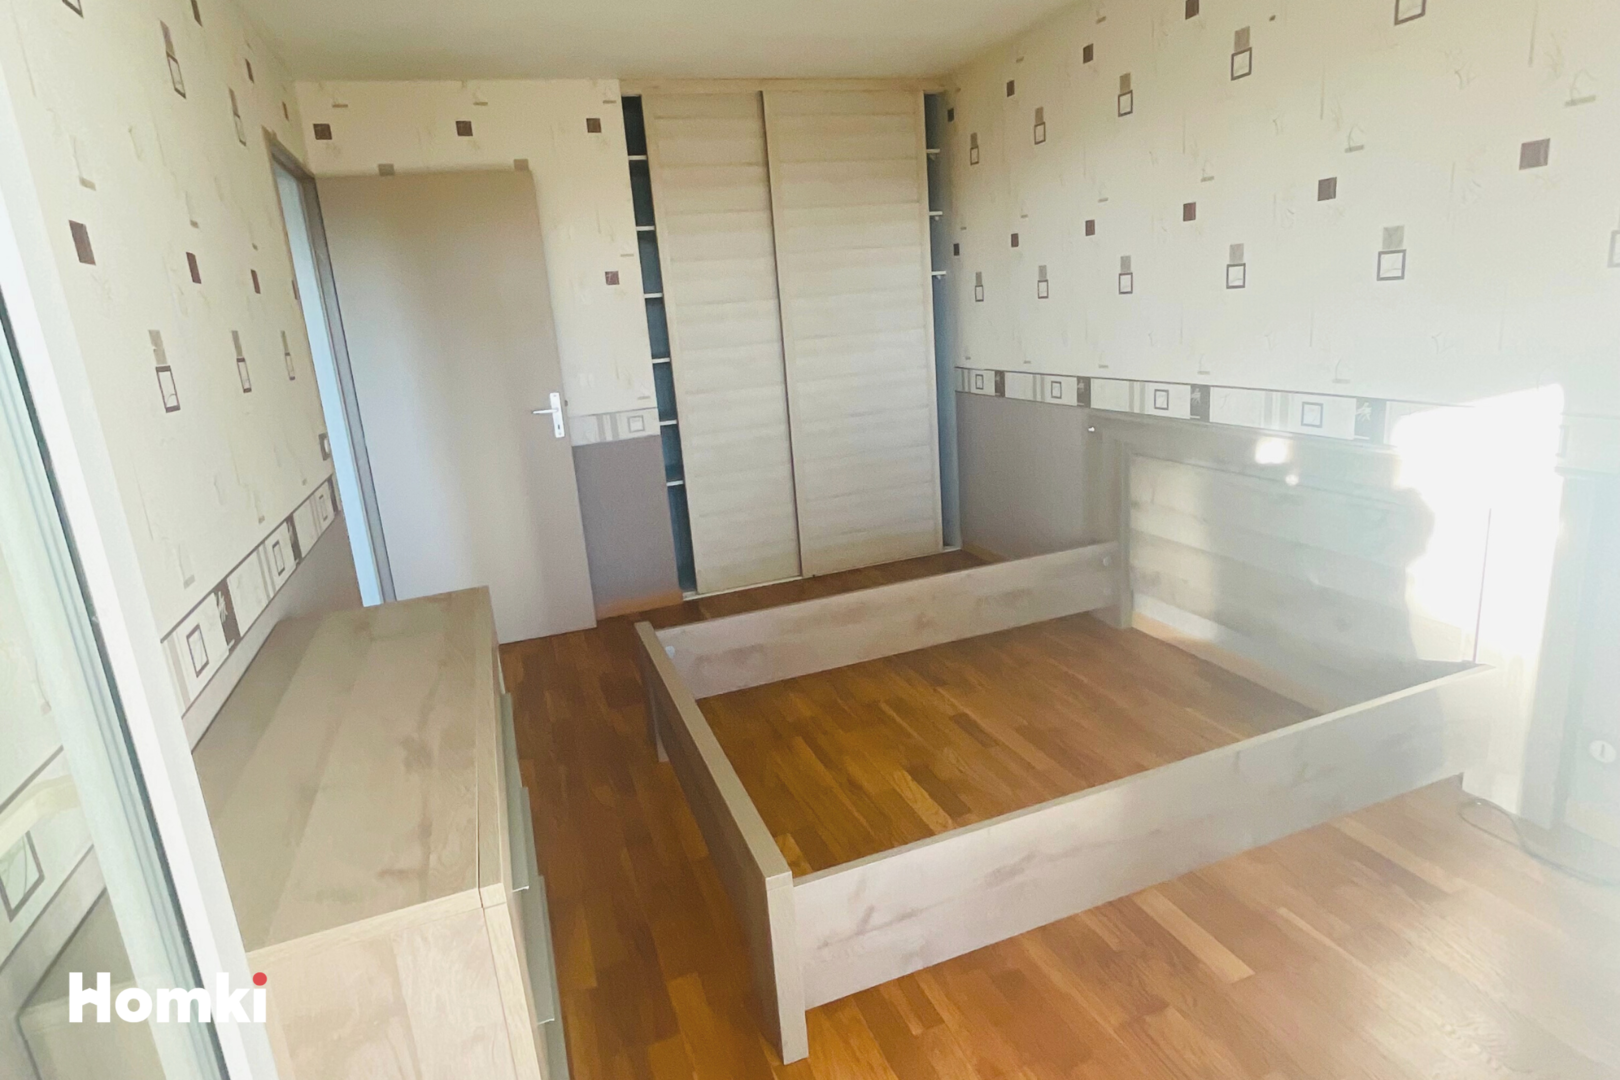 Homki - Vente Appartement  de 41.0 m² à Bidart 64210